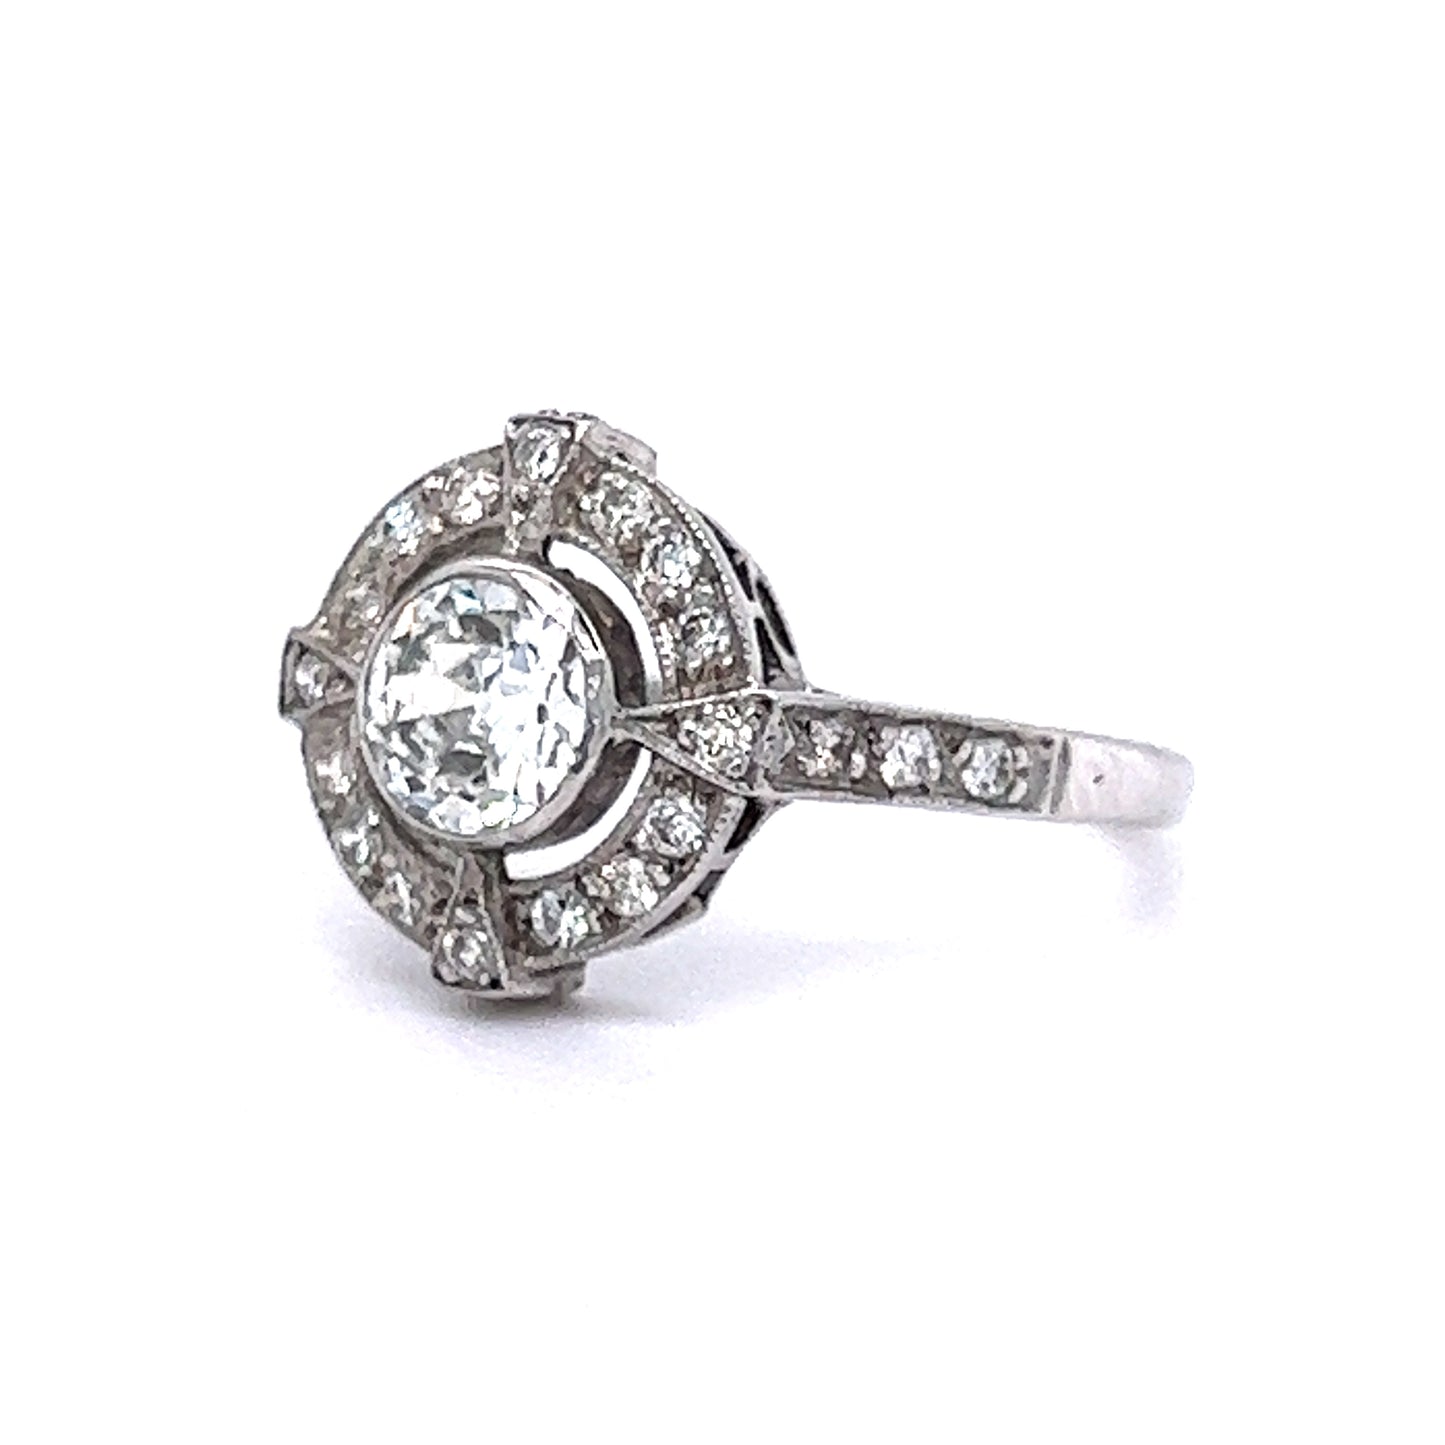 .55 Vintage Halo Diamond Engagement Ring in 18k White Gold